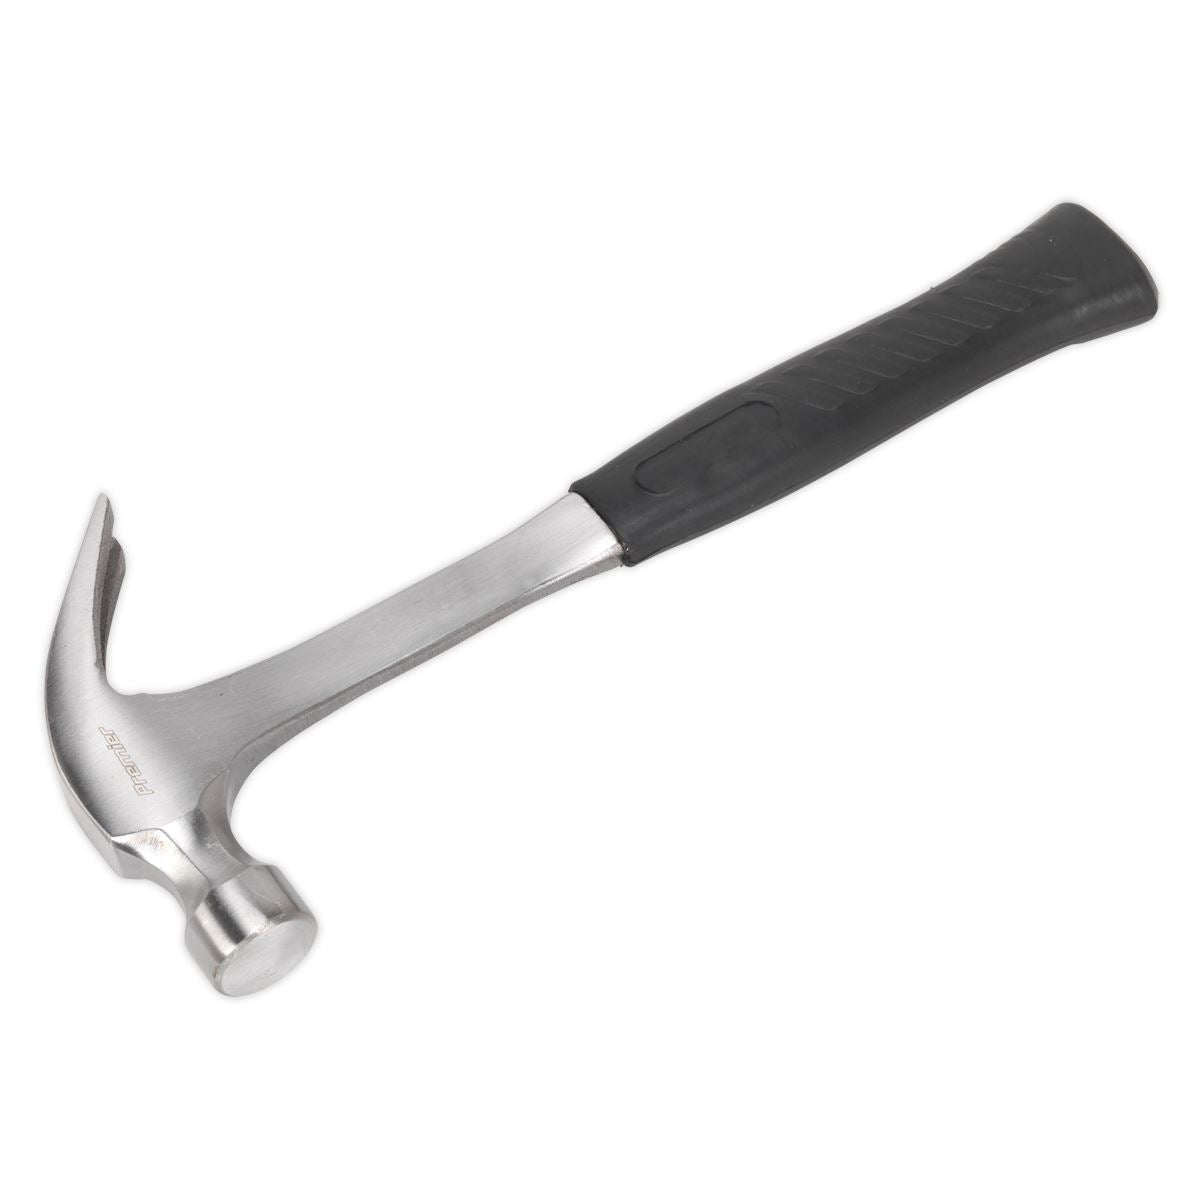 Sealey Premier Claw Hammer 16oz One-Piece Steel